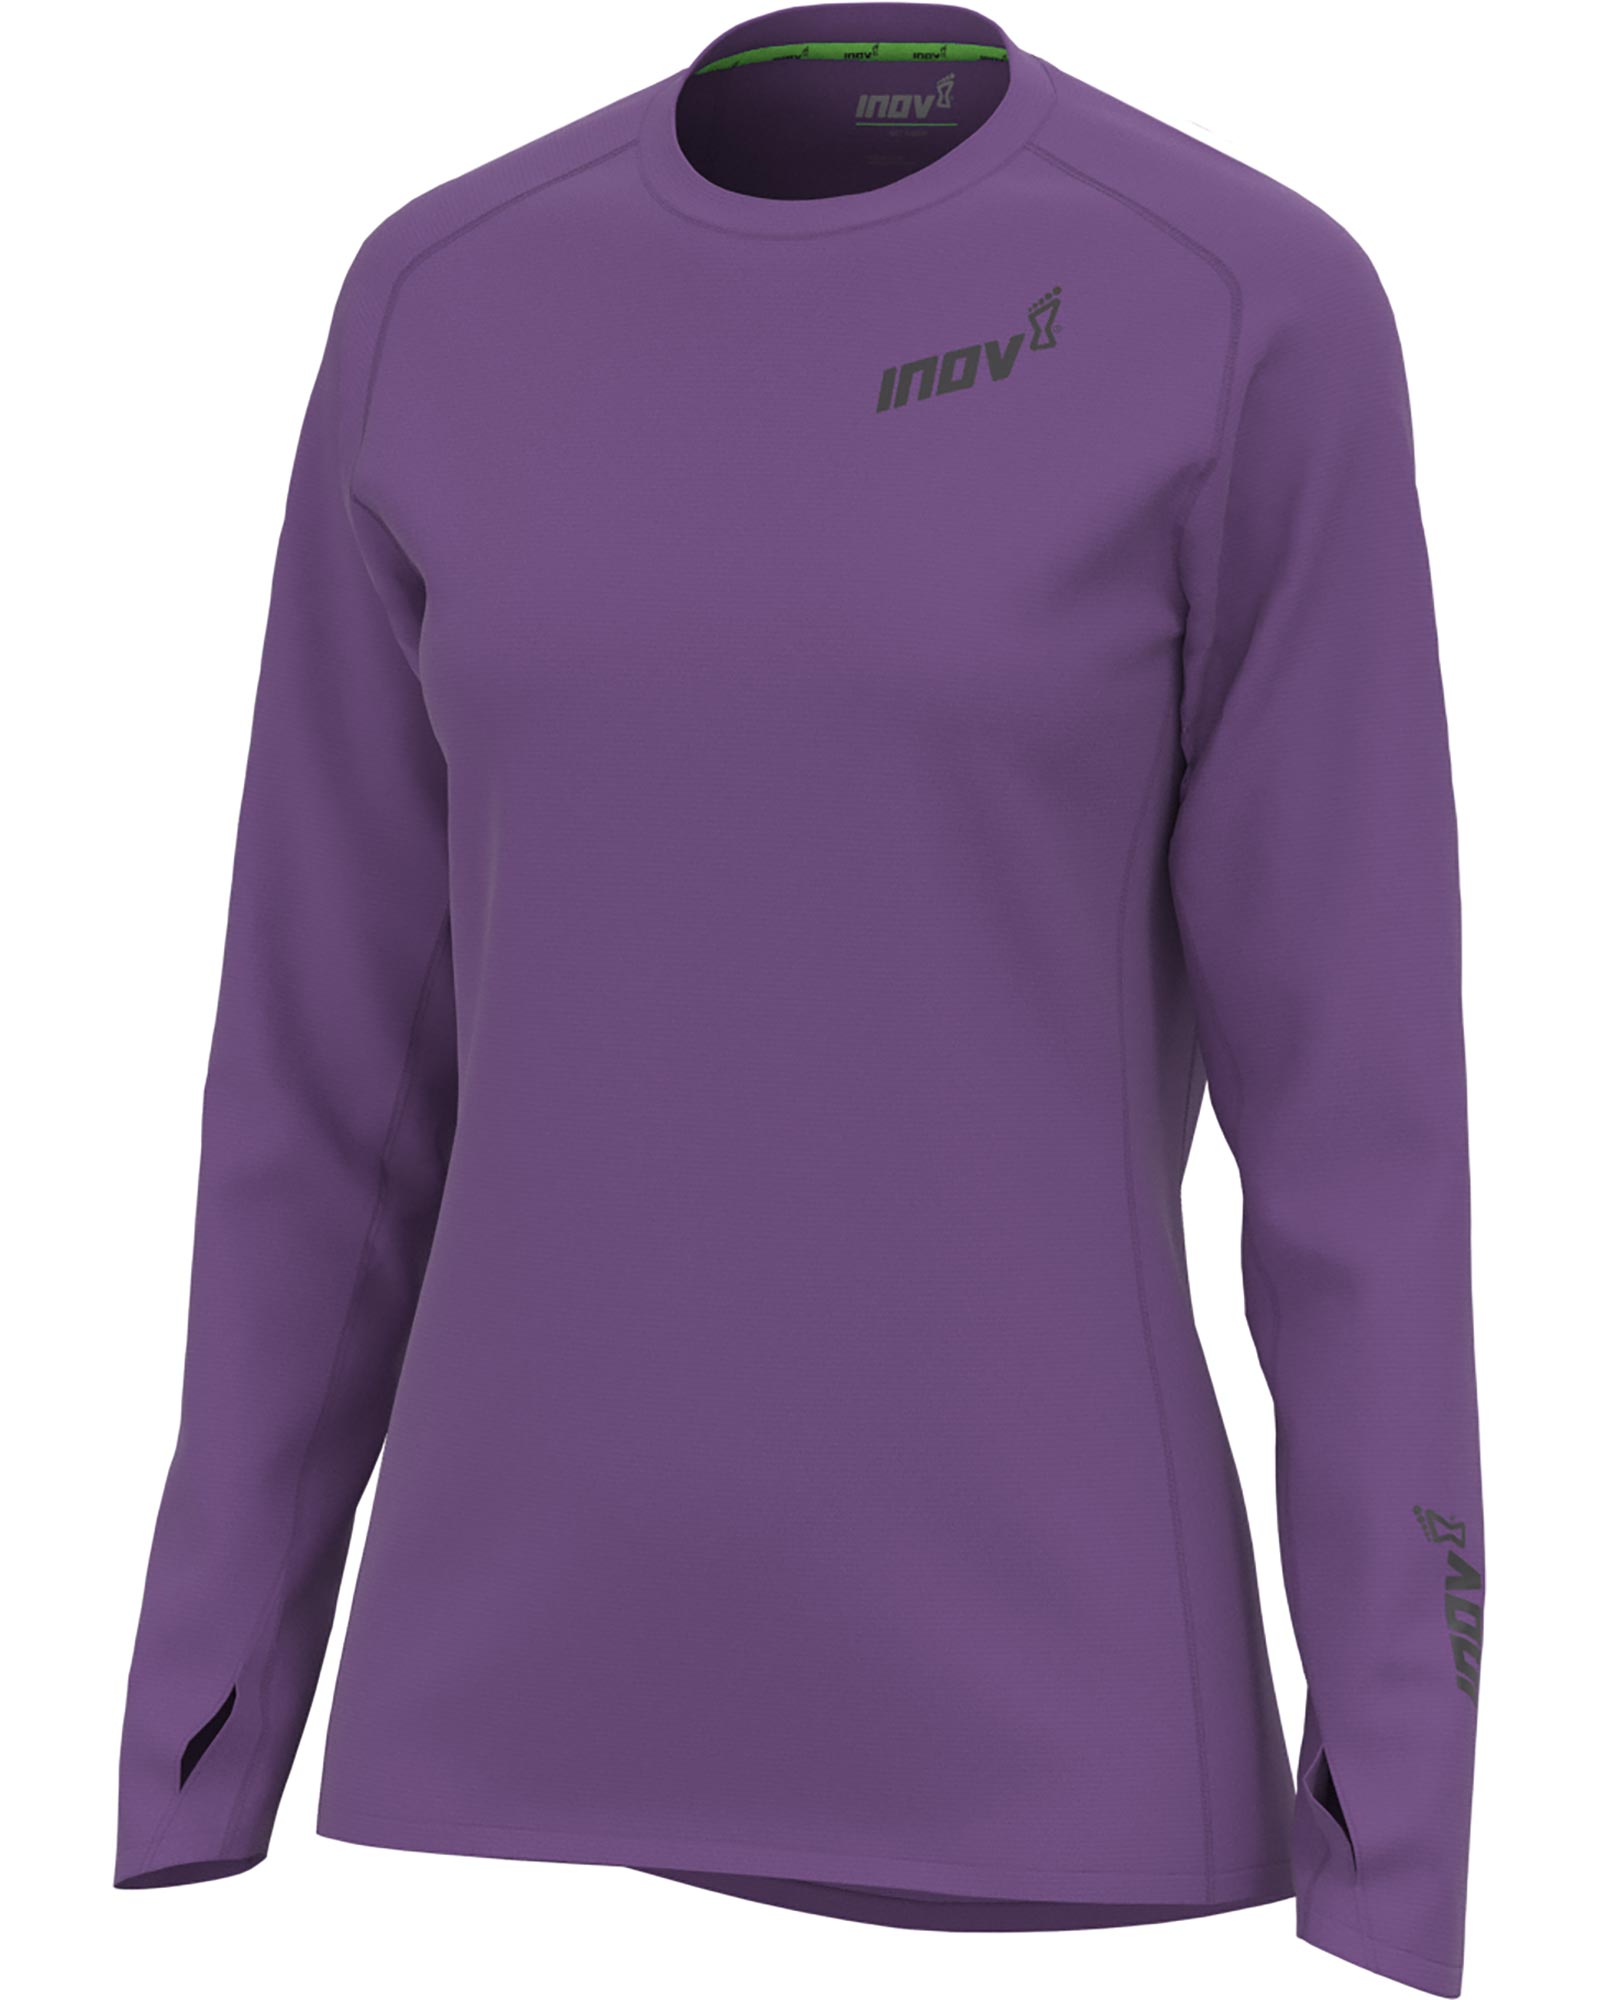 Inov 8 Base Elite Women’s Long Sleeve Top - Purple 14